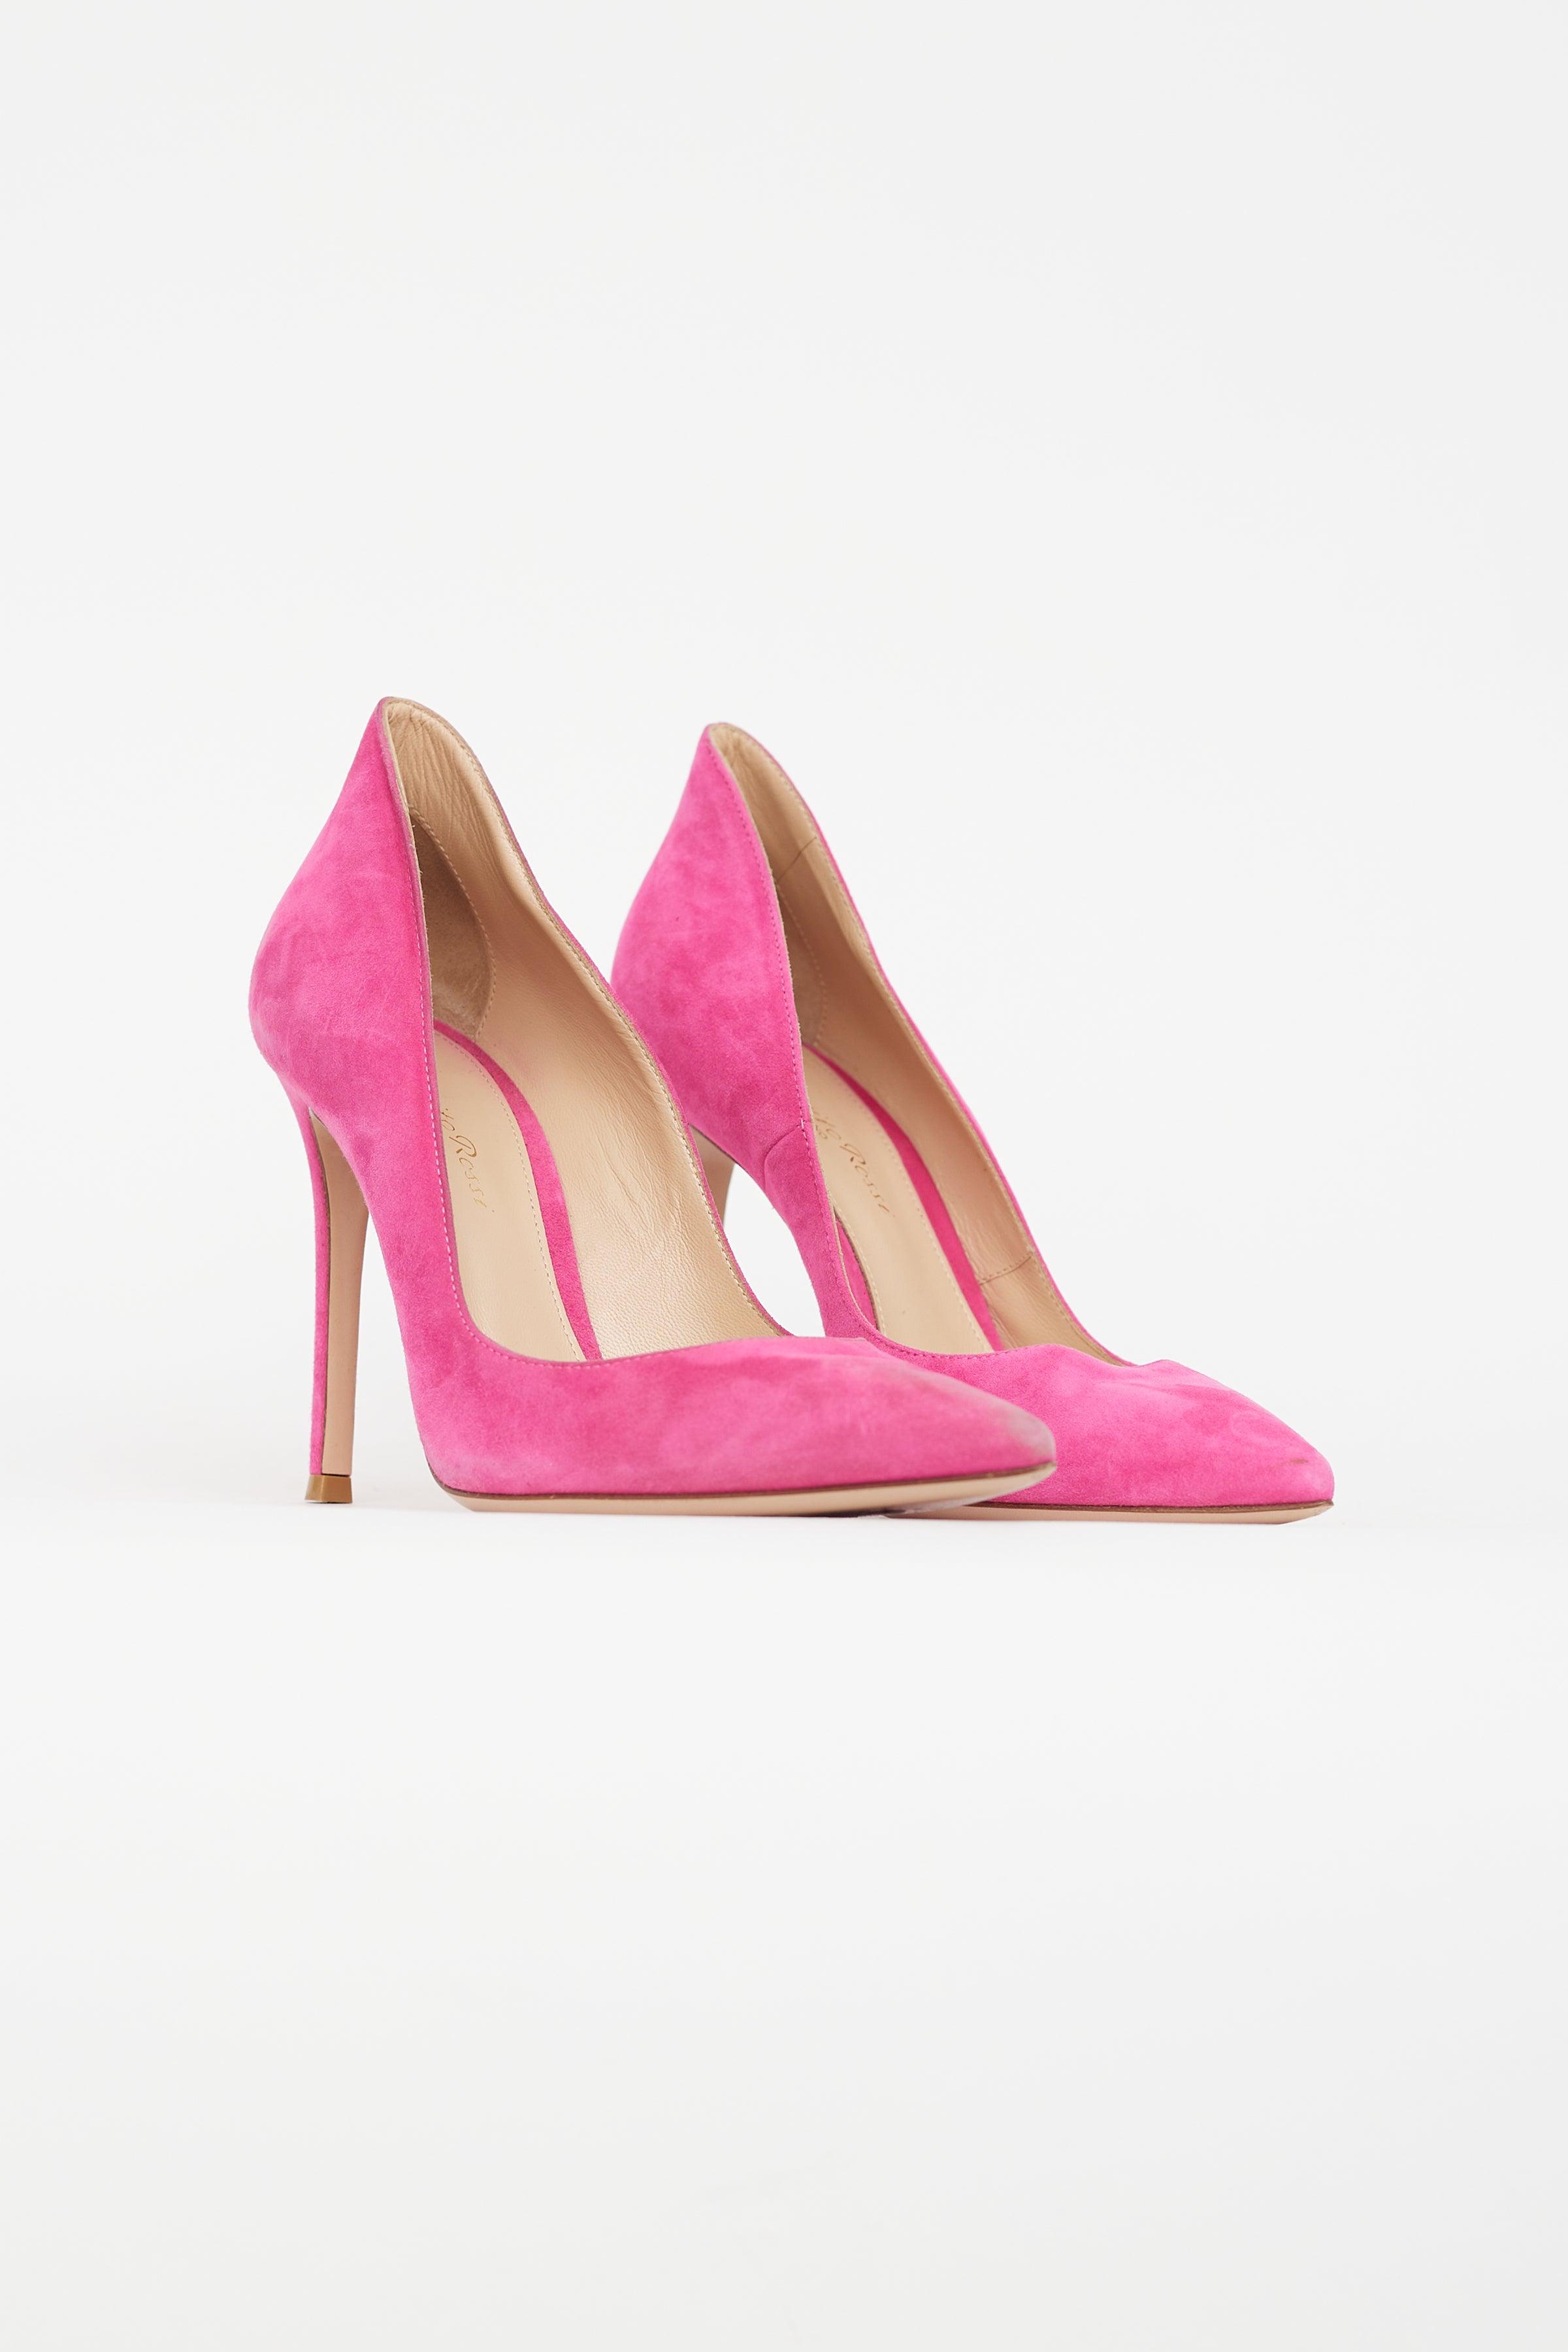 Buy Aldo Women's Pink Stiletto Pumps for Women at Best Price @ Tata CLiQ